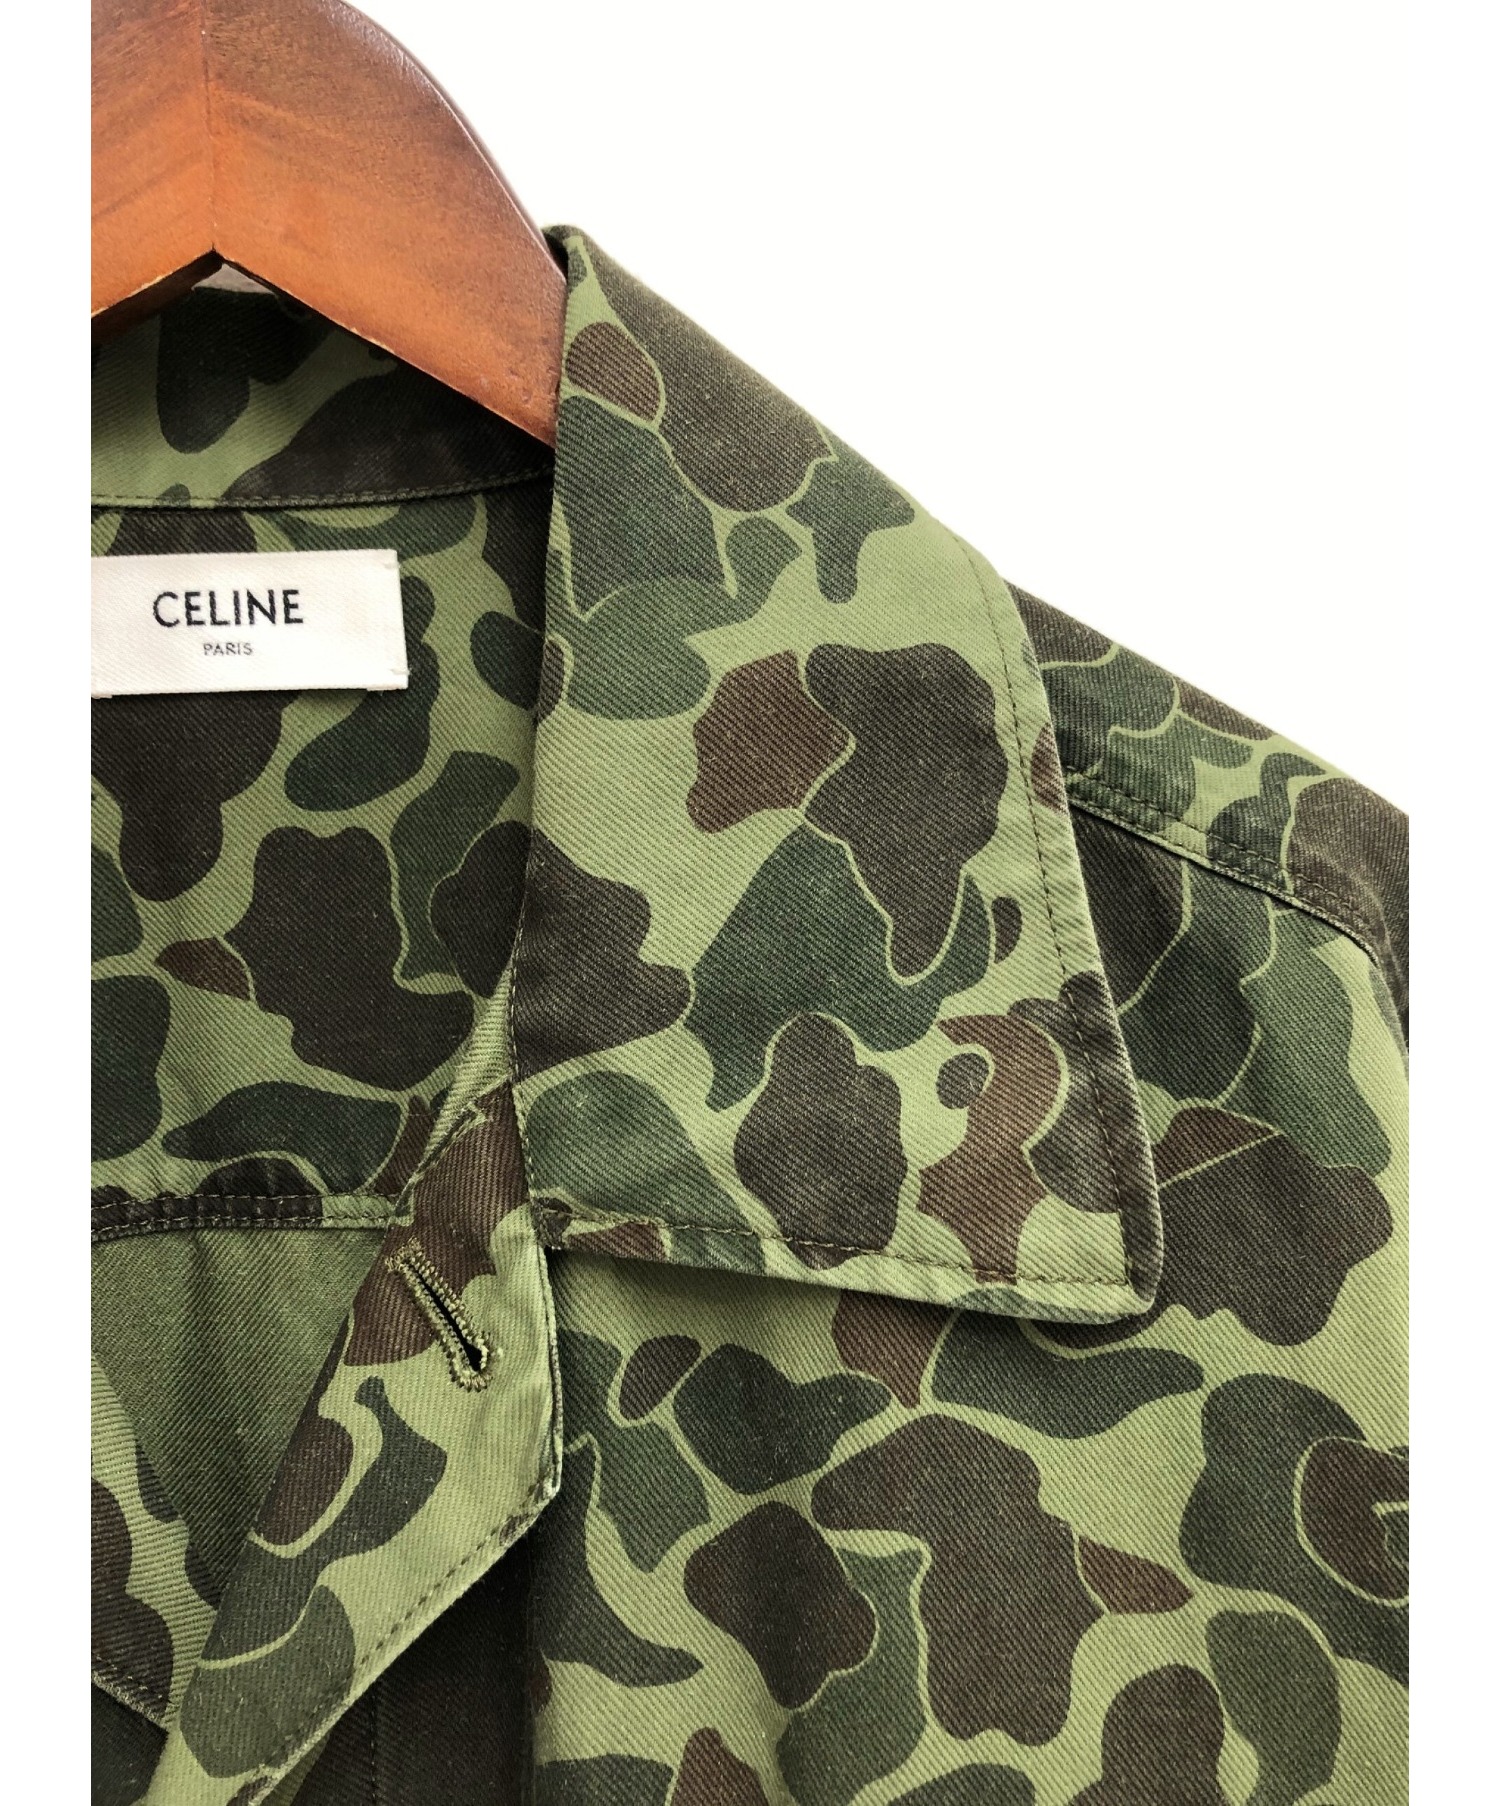 CELINE (セリーヌ) ミリタリーオーバーシャツ サイズ:M カモフラージュ柄